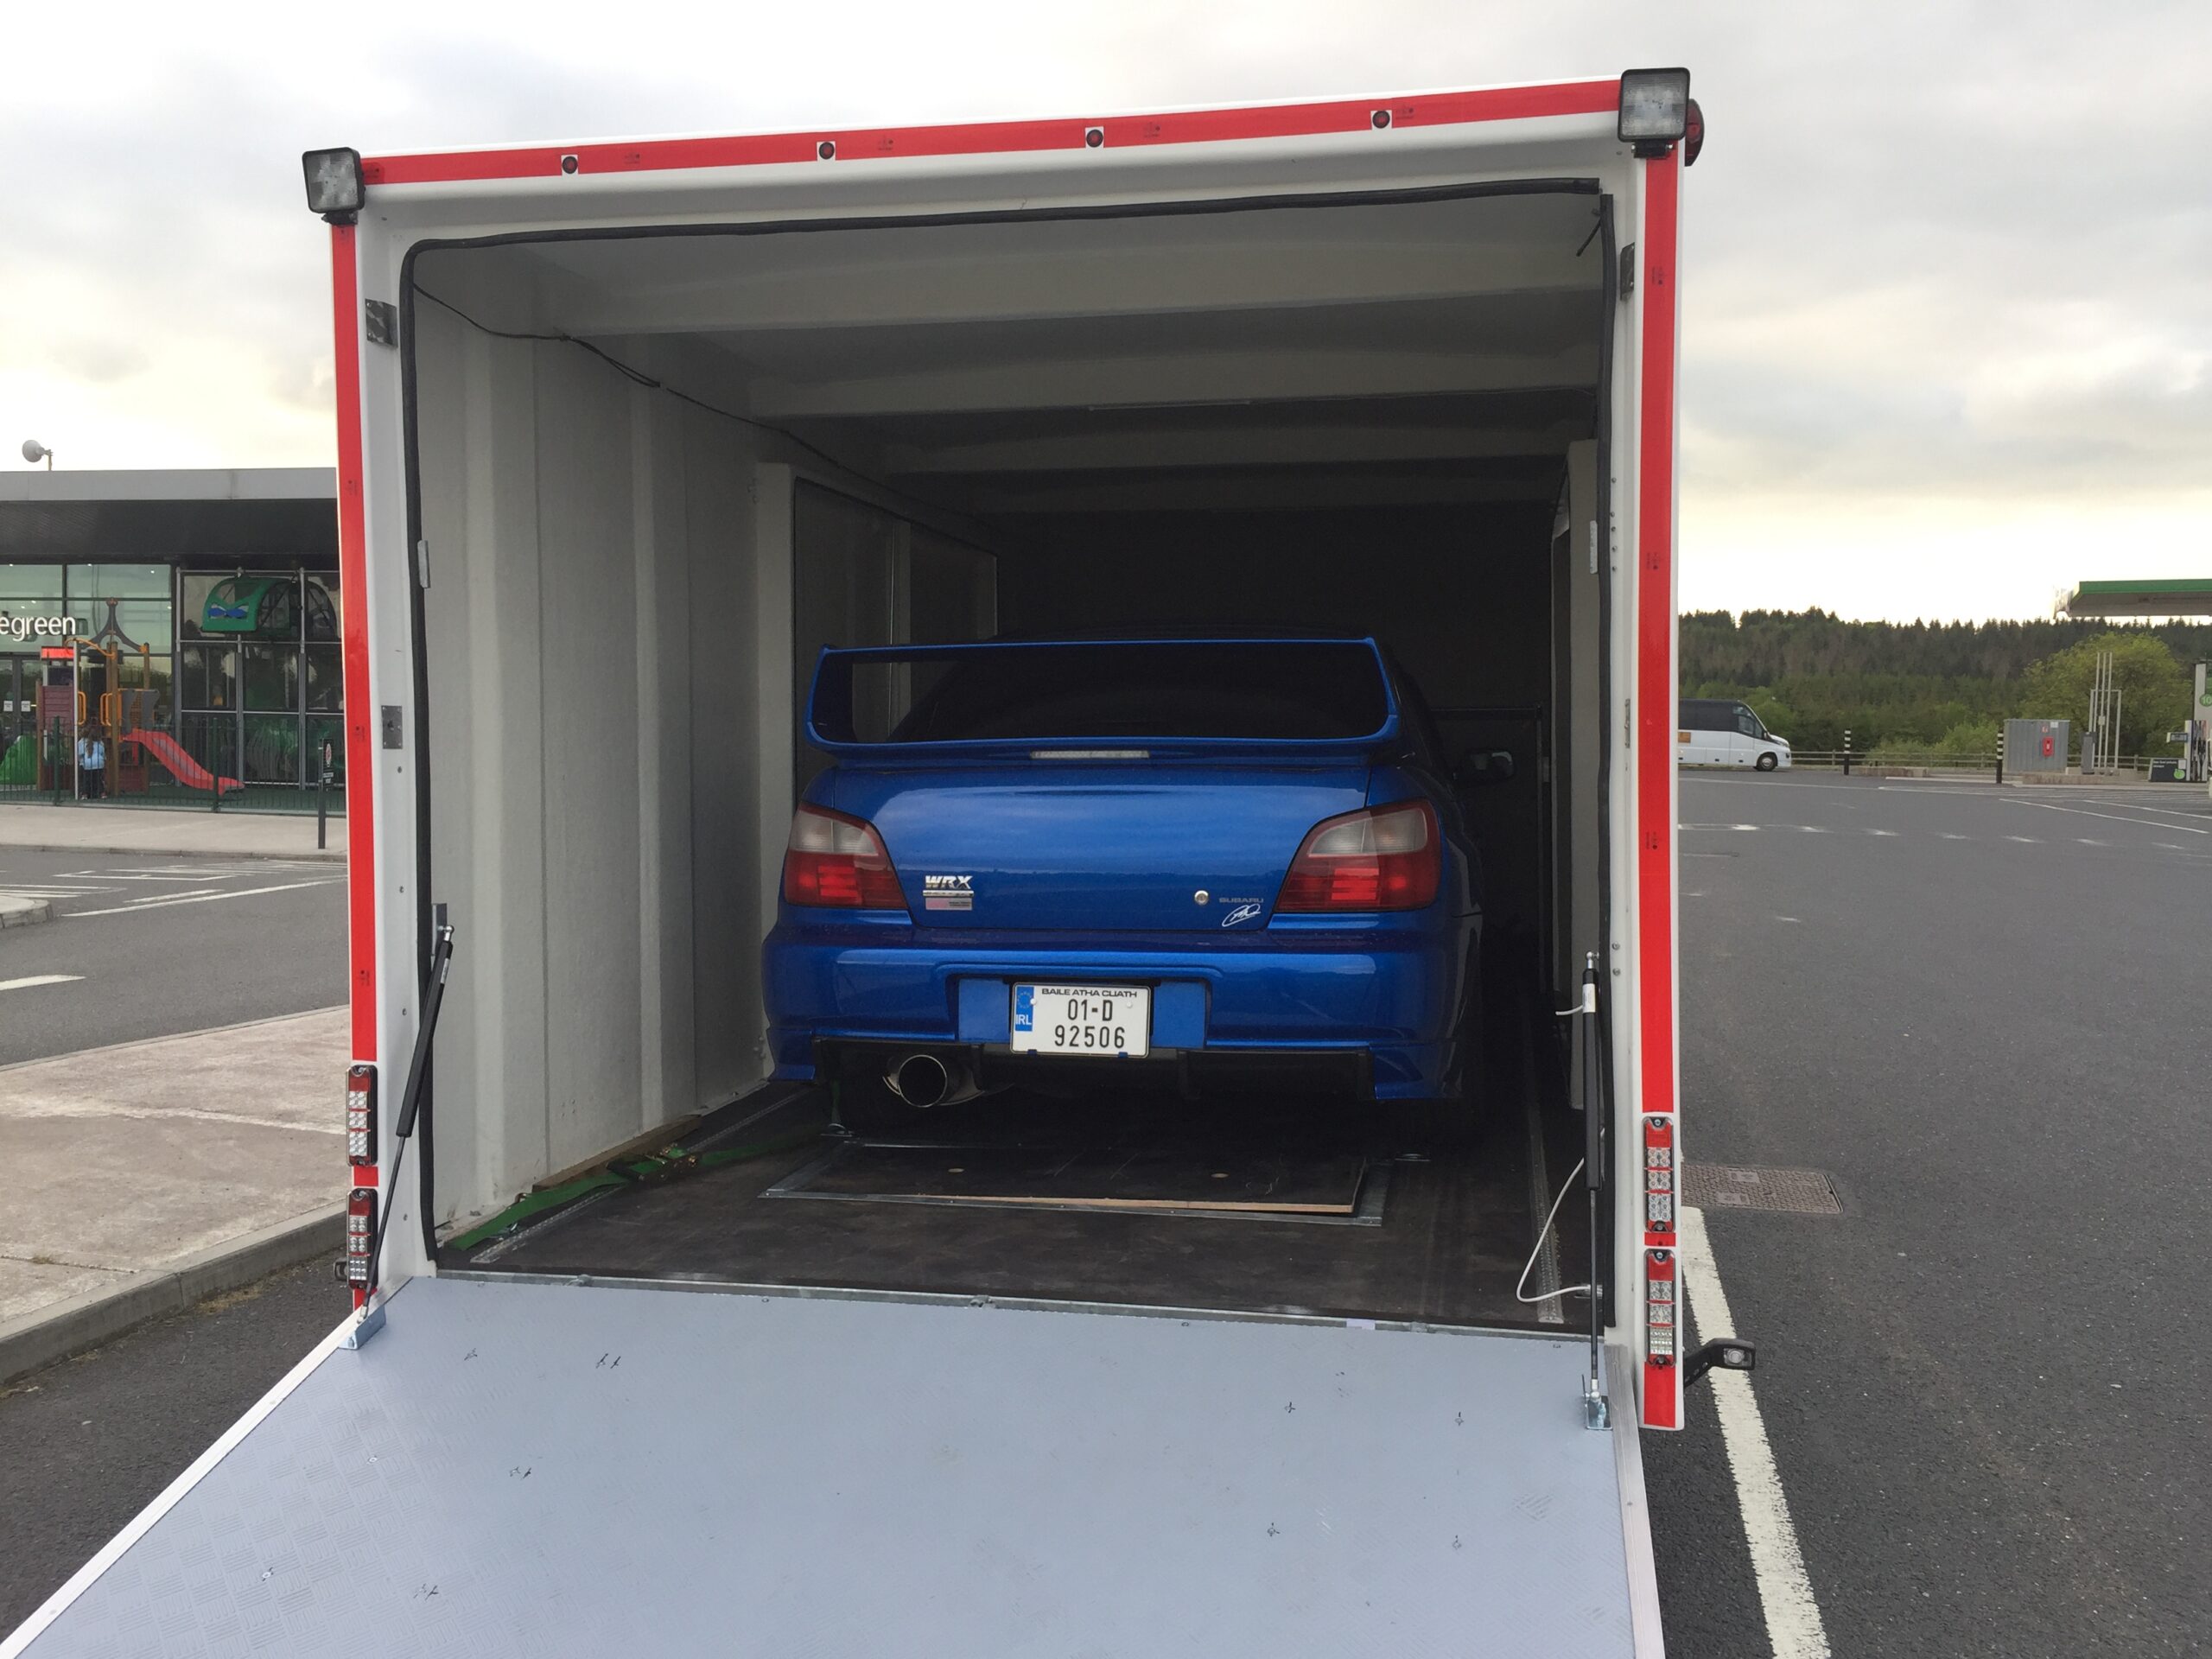 Blue Subaru inside a white enclosed vehicle trailer